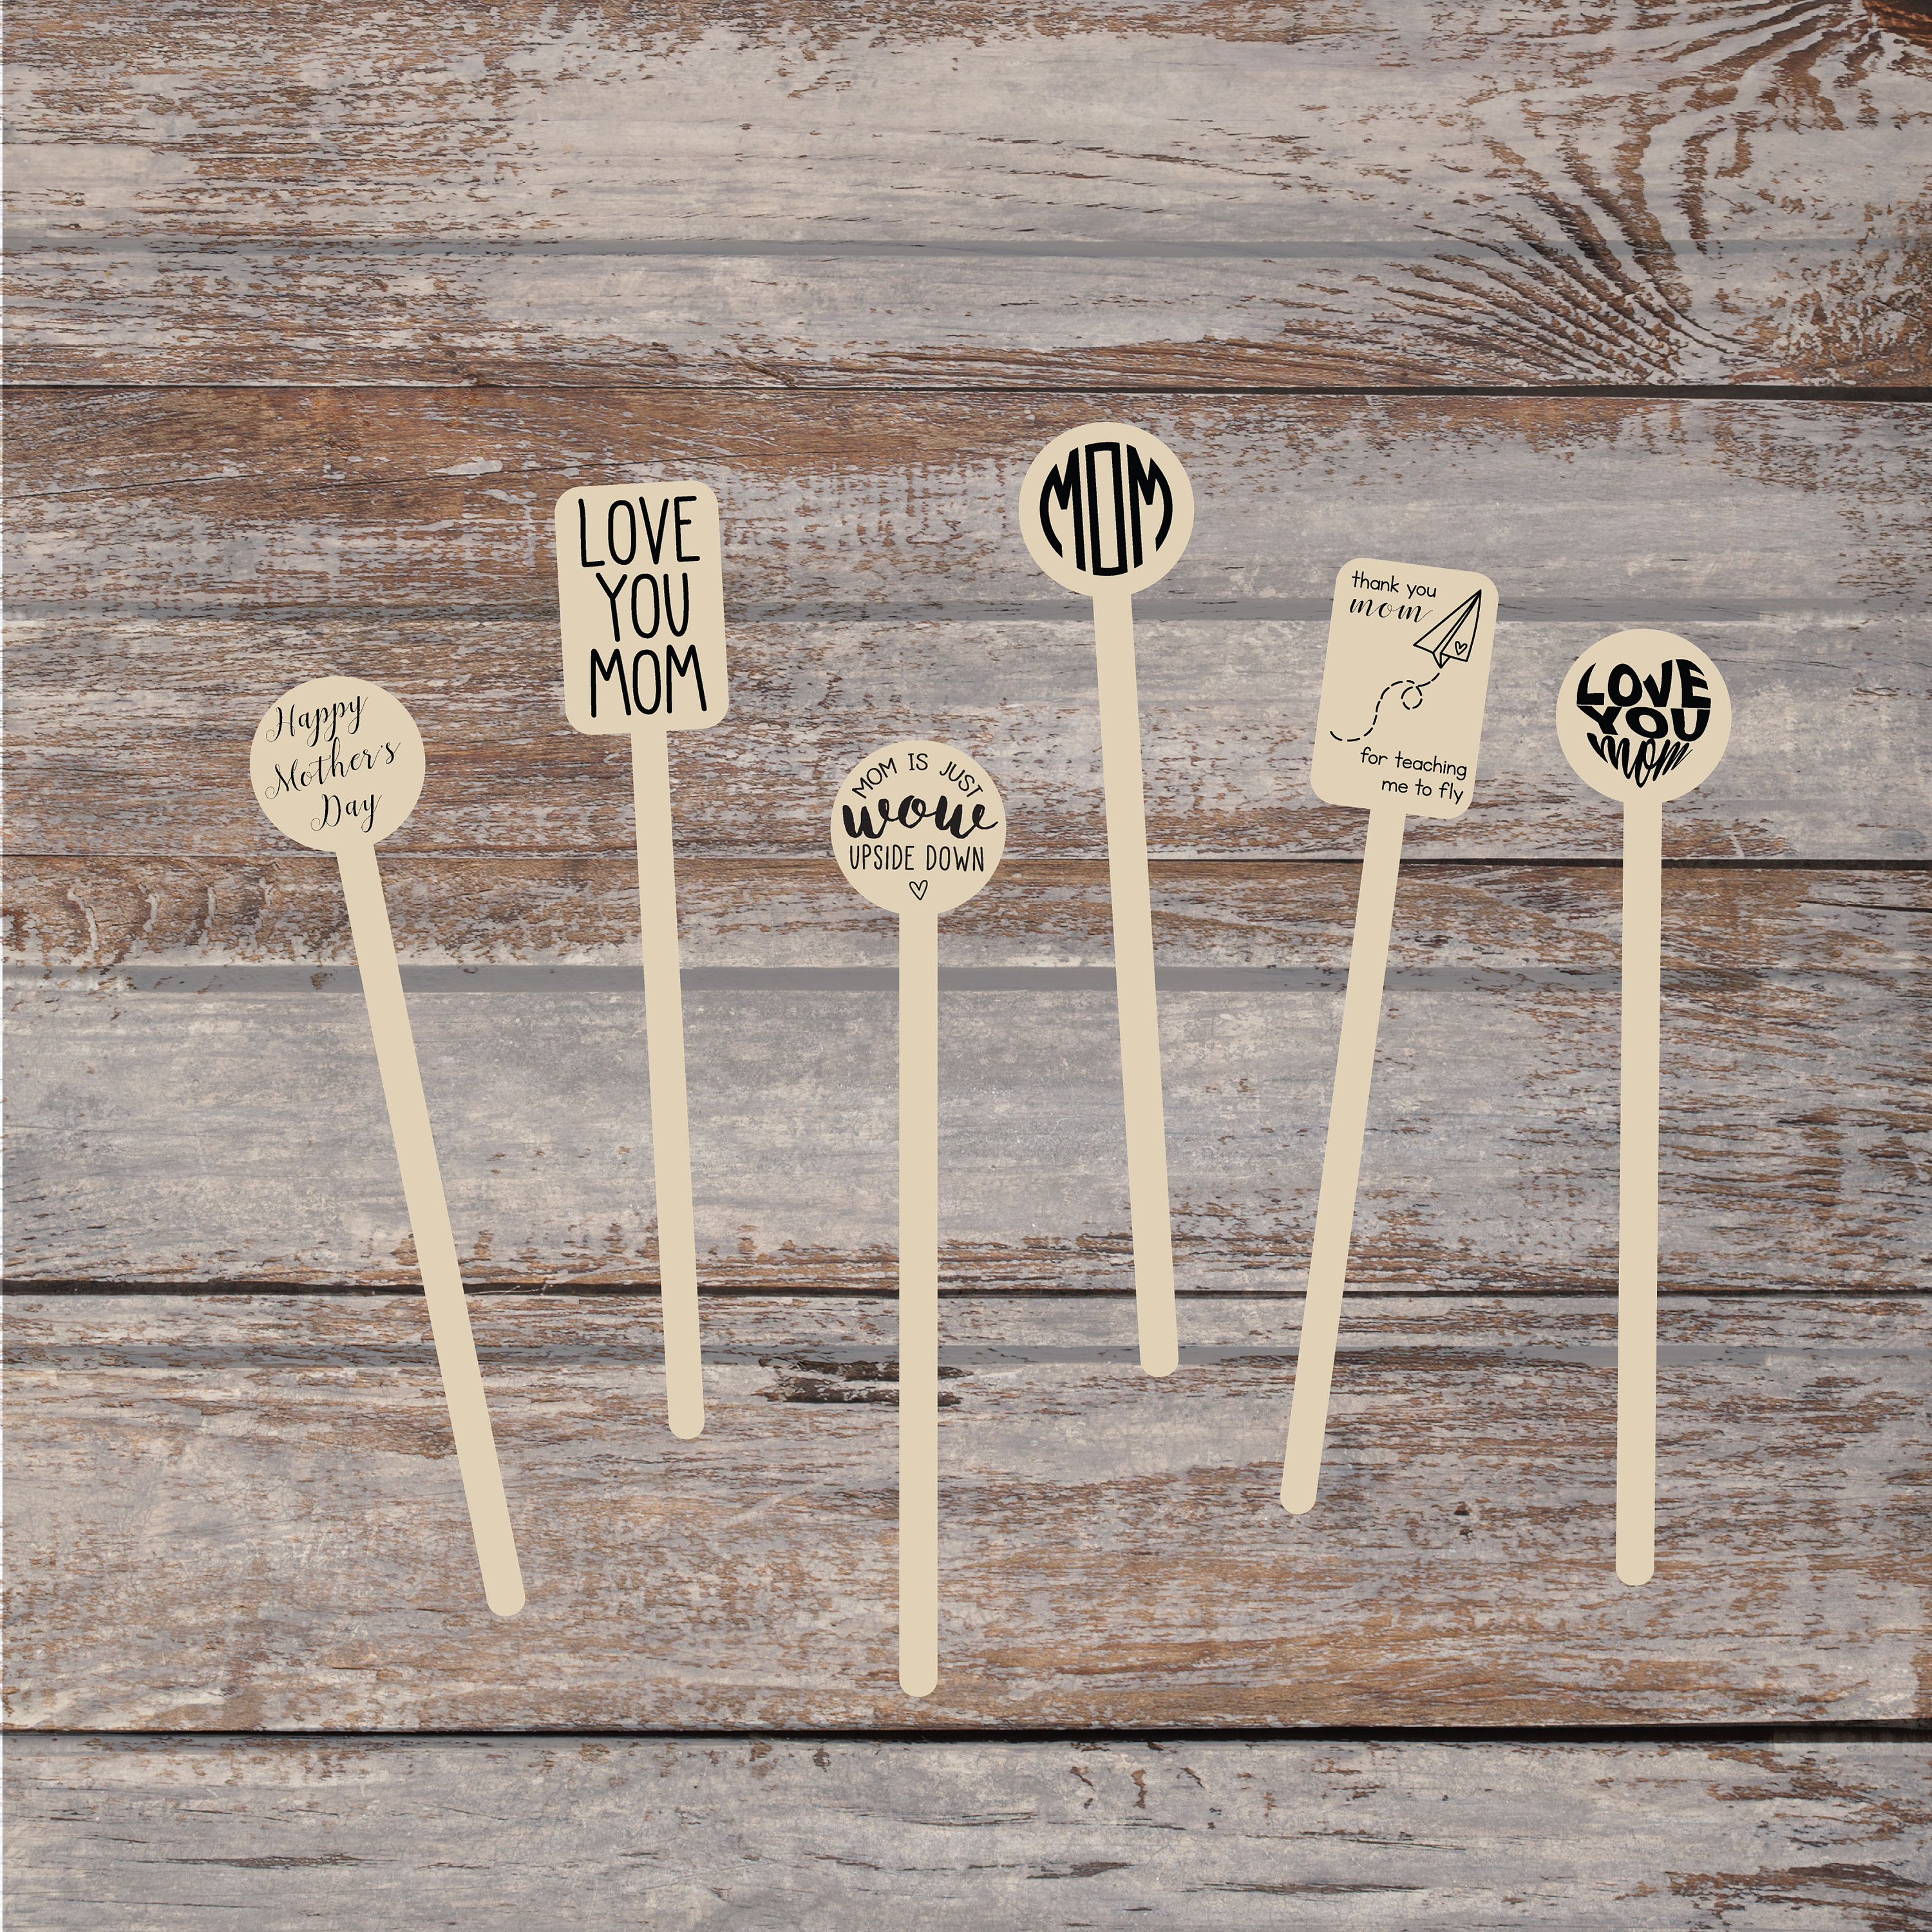 SHIPPING FREE U S Cupcake Picks Baby Designs Wooden Drink Stirrers- Wood Coffee Stir Sticks